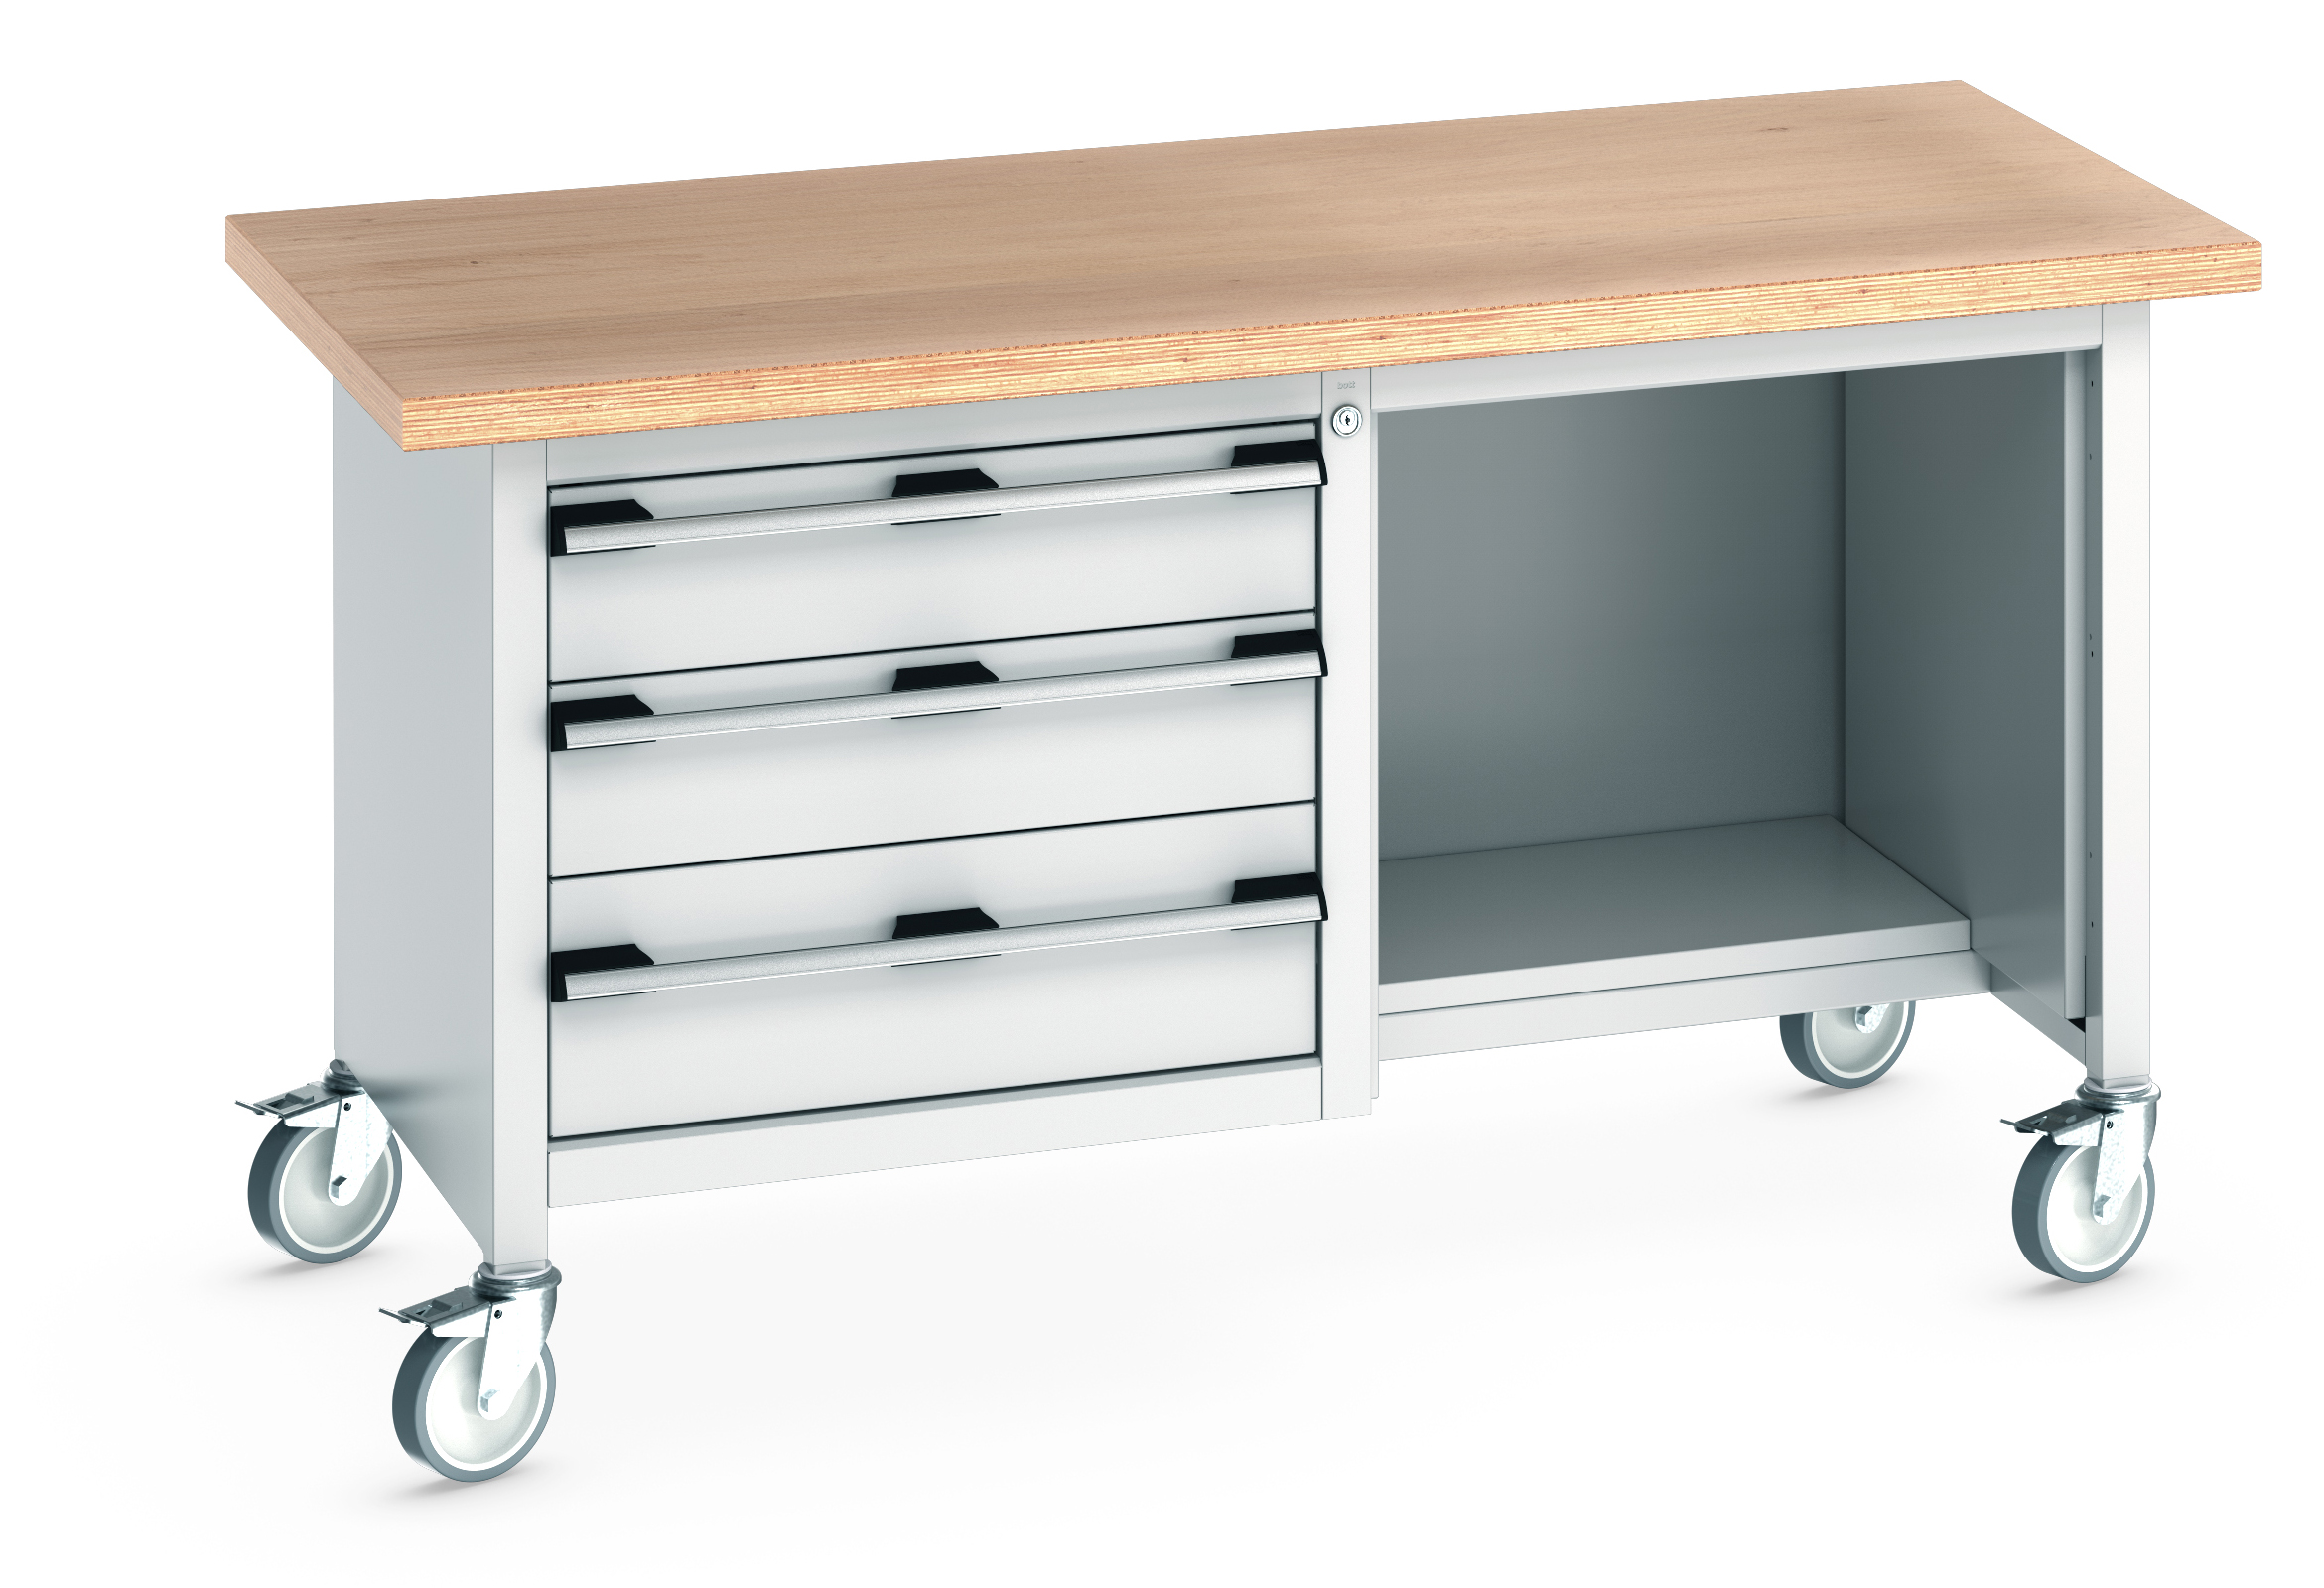 Bott Cubio Mobile Storage Bench With 3 Drawer Cabinet / Open With Half Depth Base Shelf - 41002115.16V